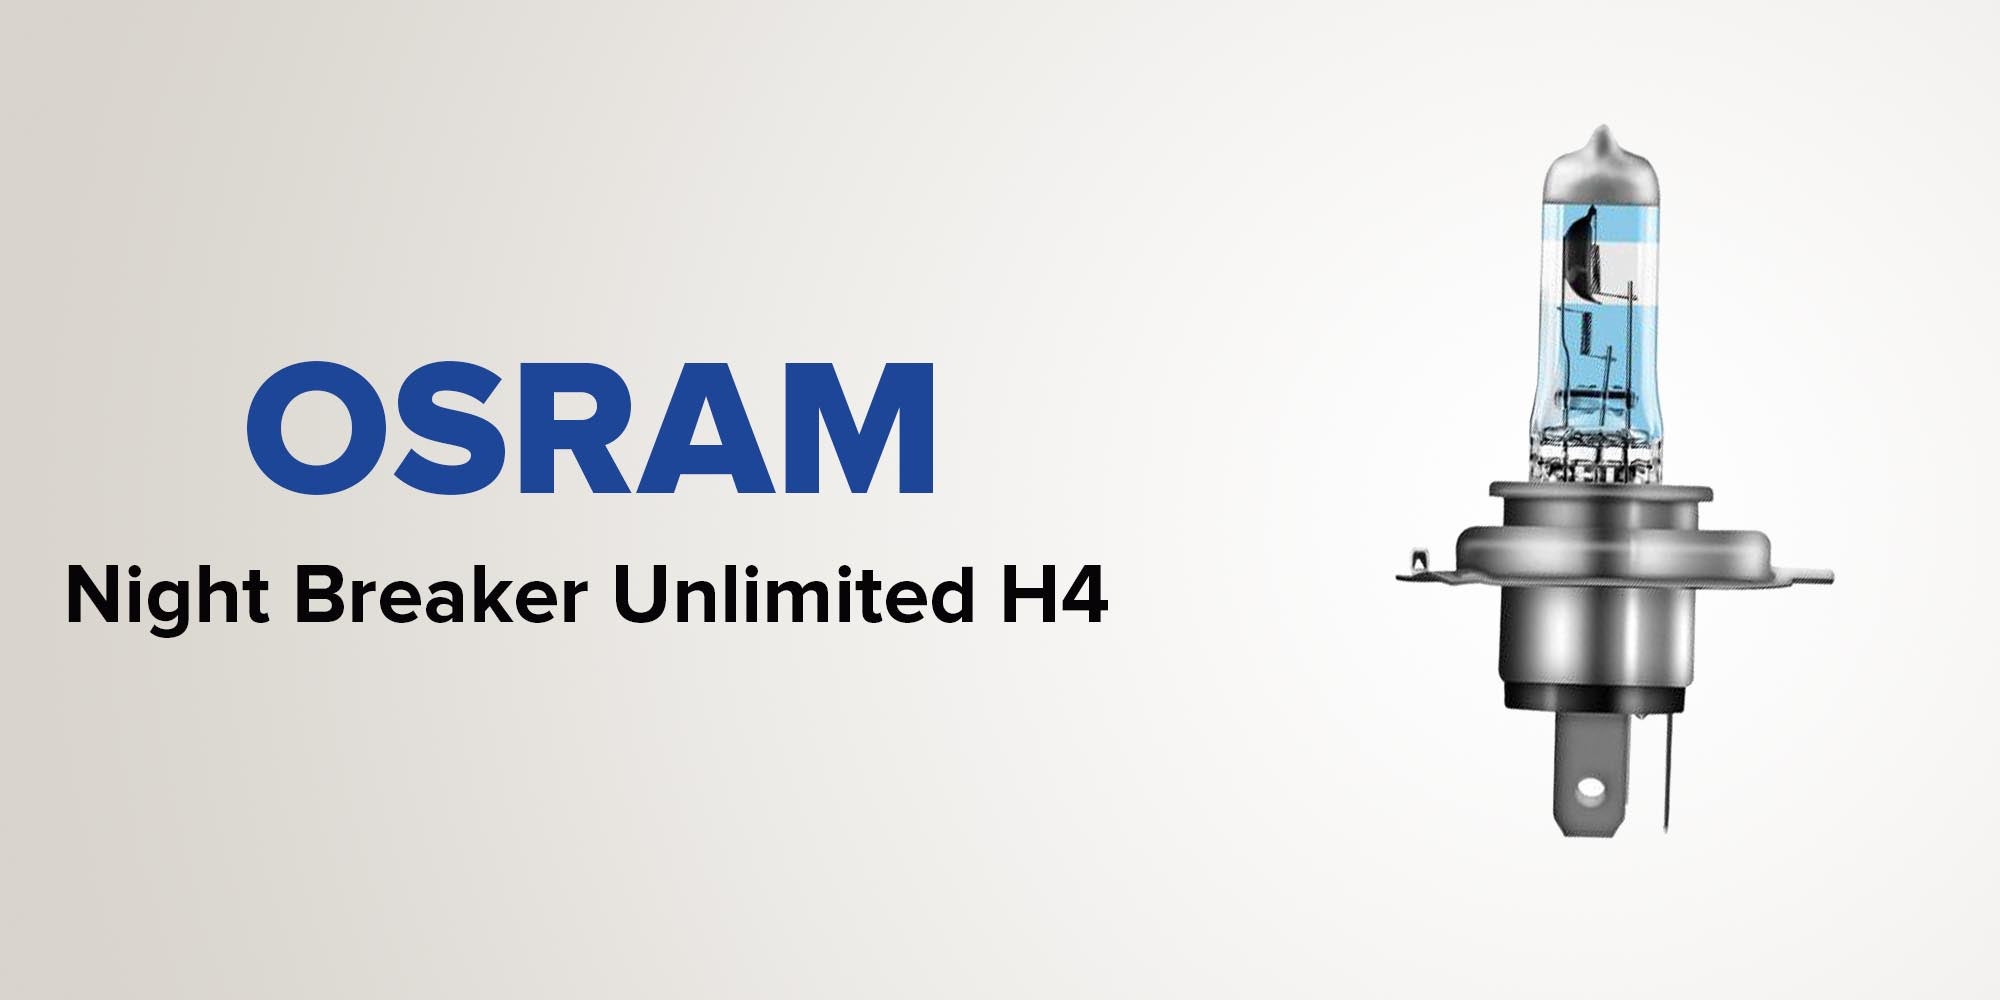 OSRAM Night Breaker Unlimited (H4, 12V 60/55W)